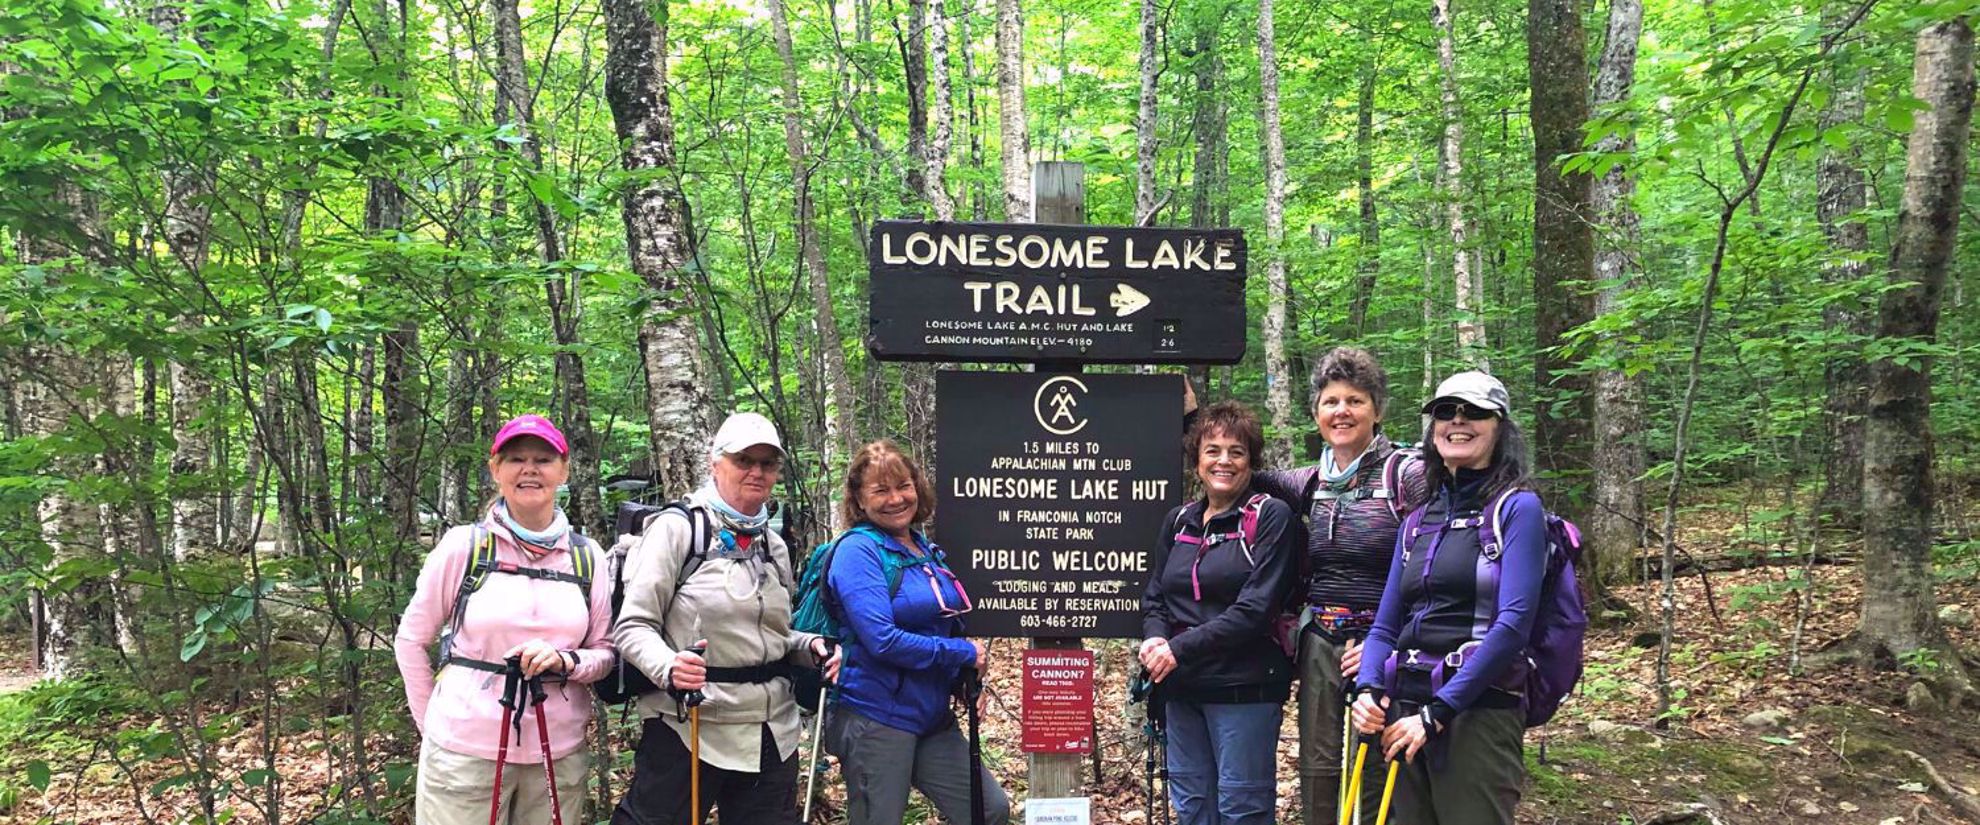 women's adventure hiking tour